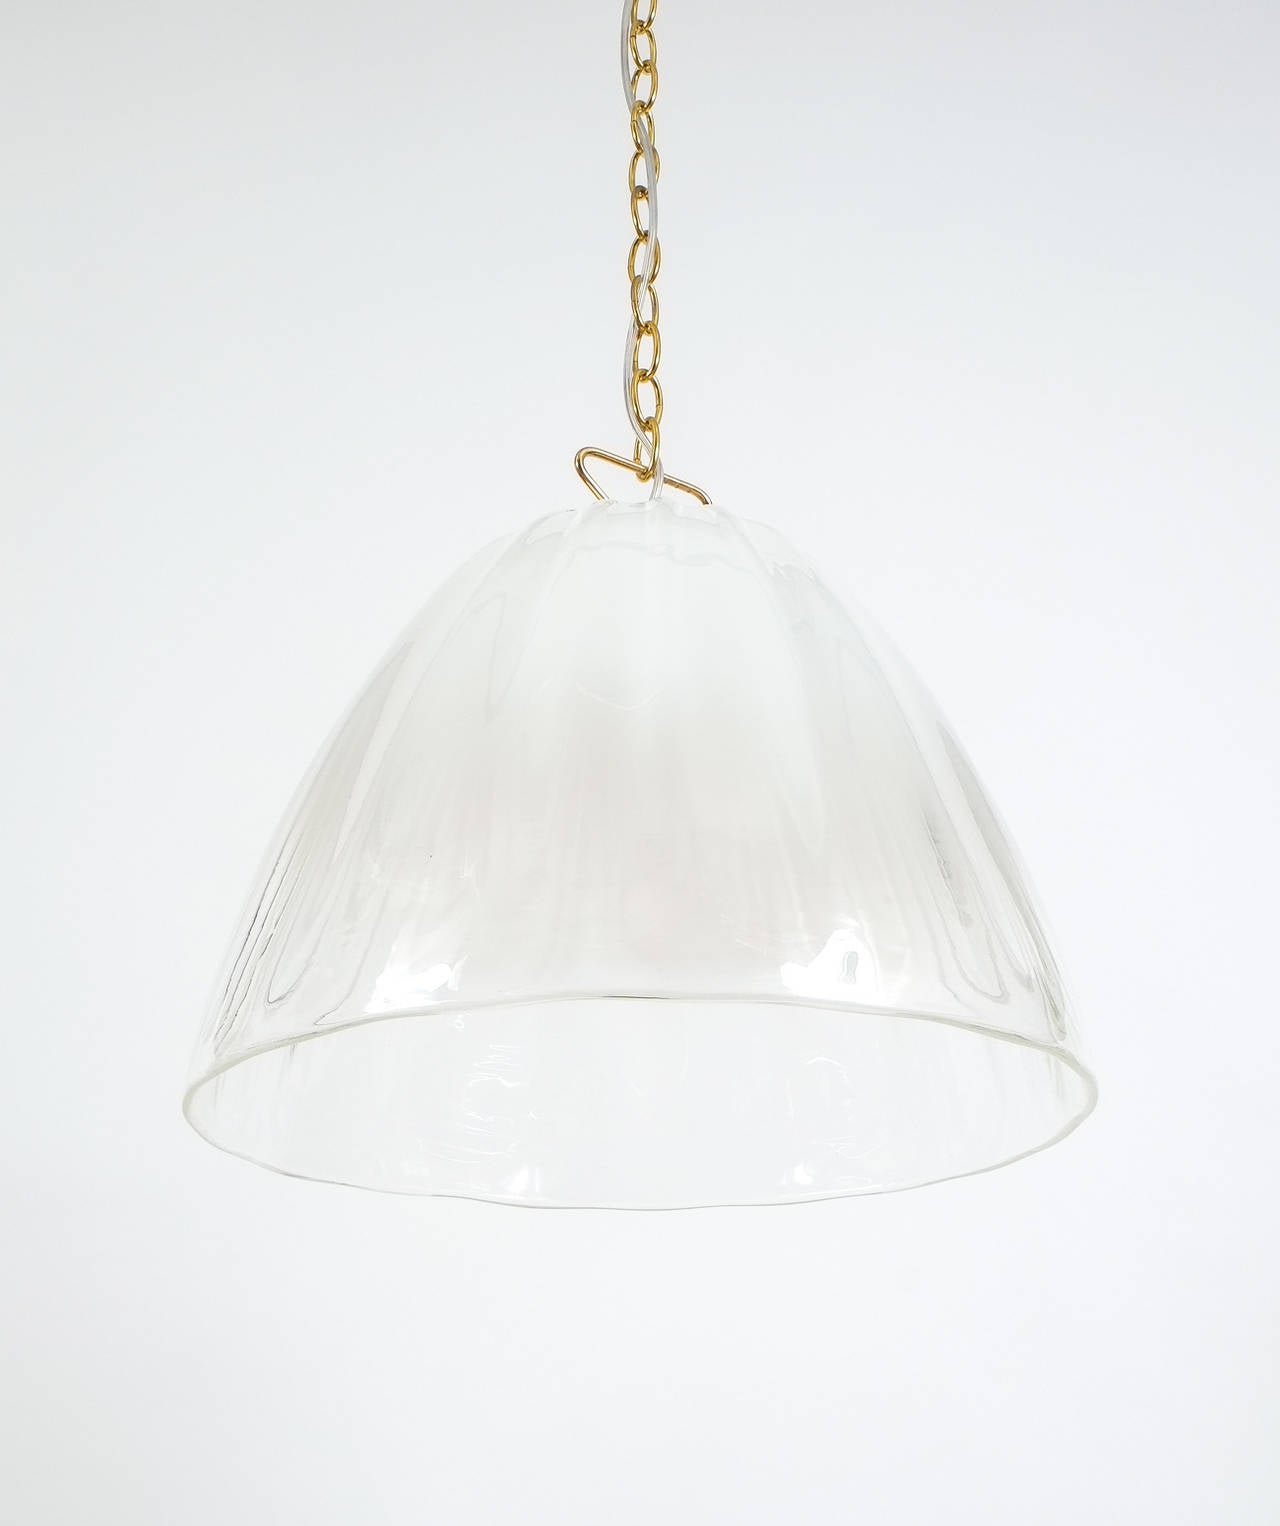 J.T. Kalmar Kiriglass Glass Pendant Lamp, Austria, 1960 In Good Condition For Sale In Vienna, AT